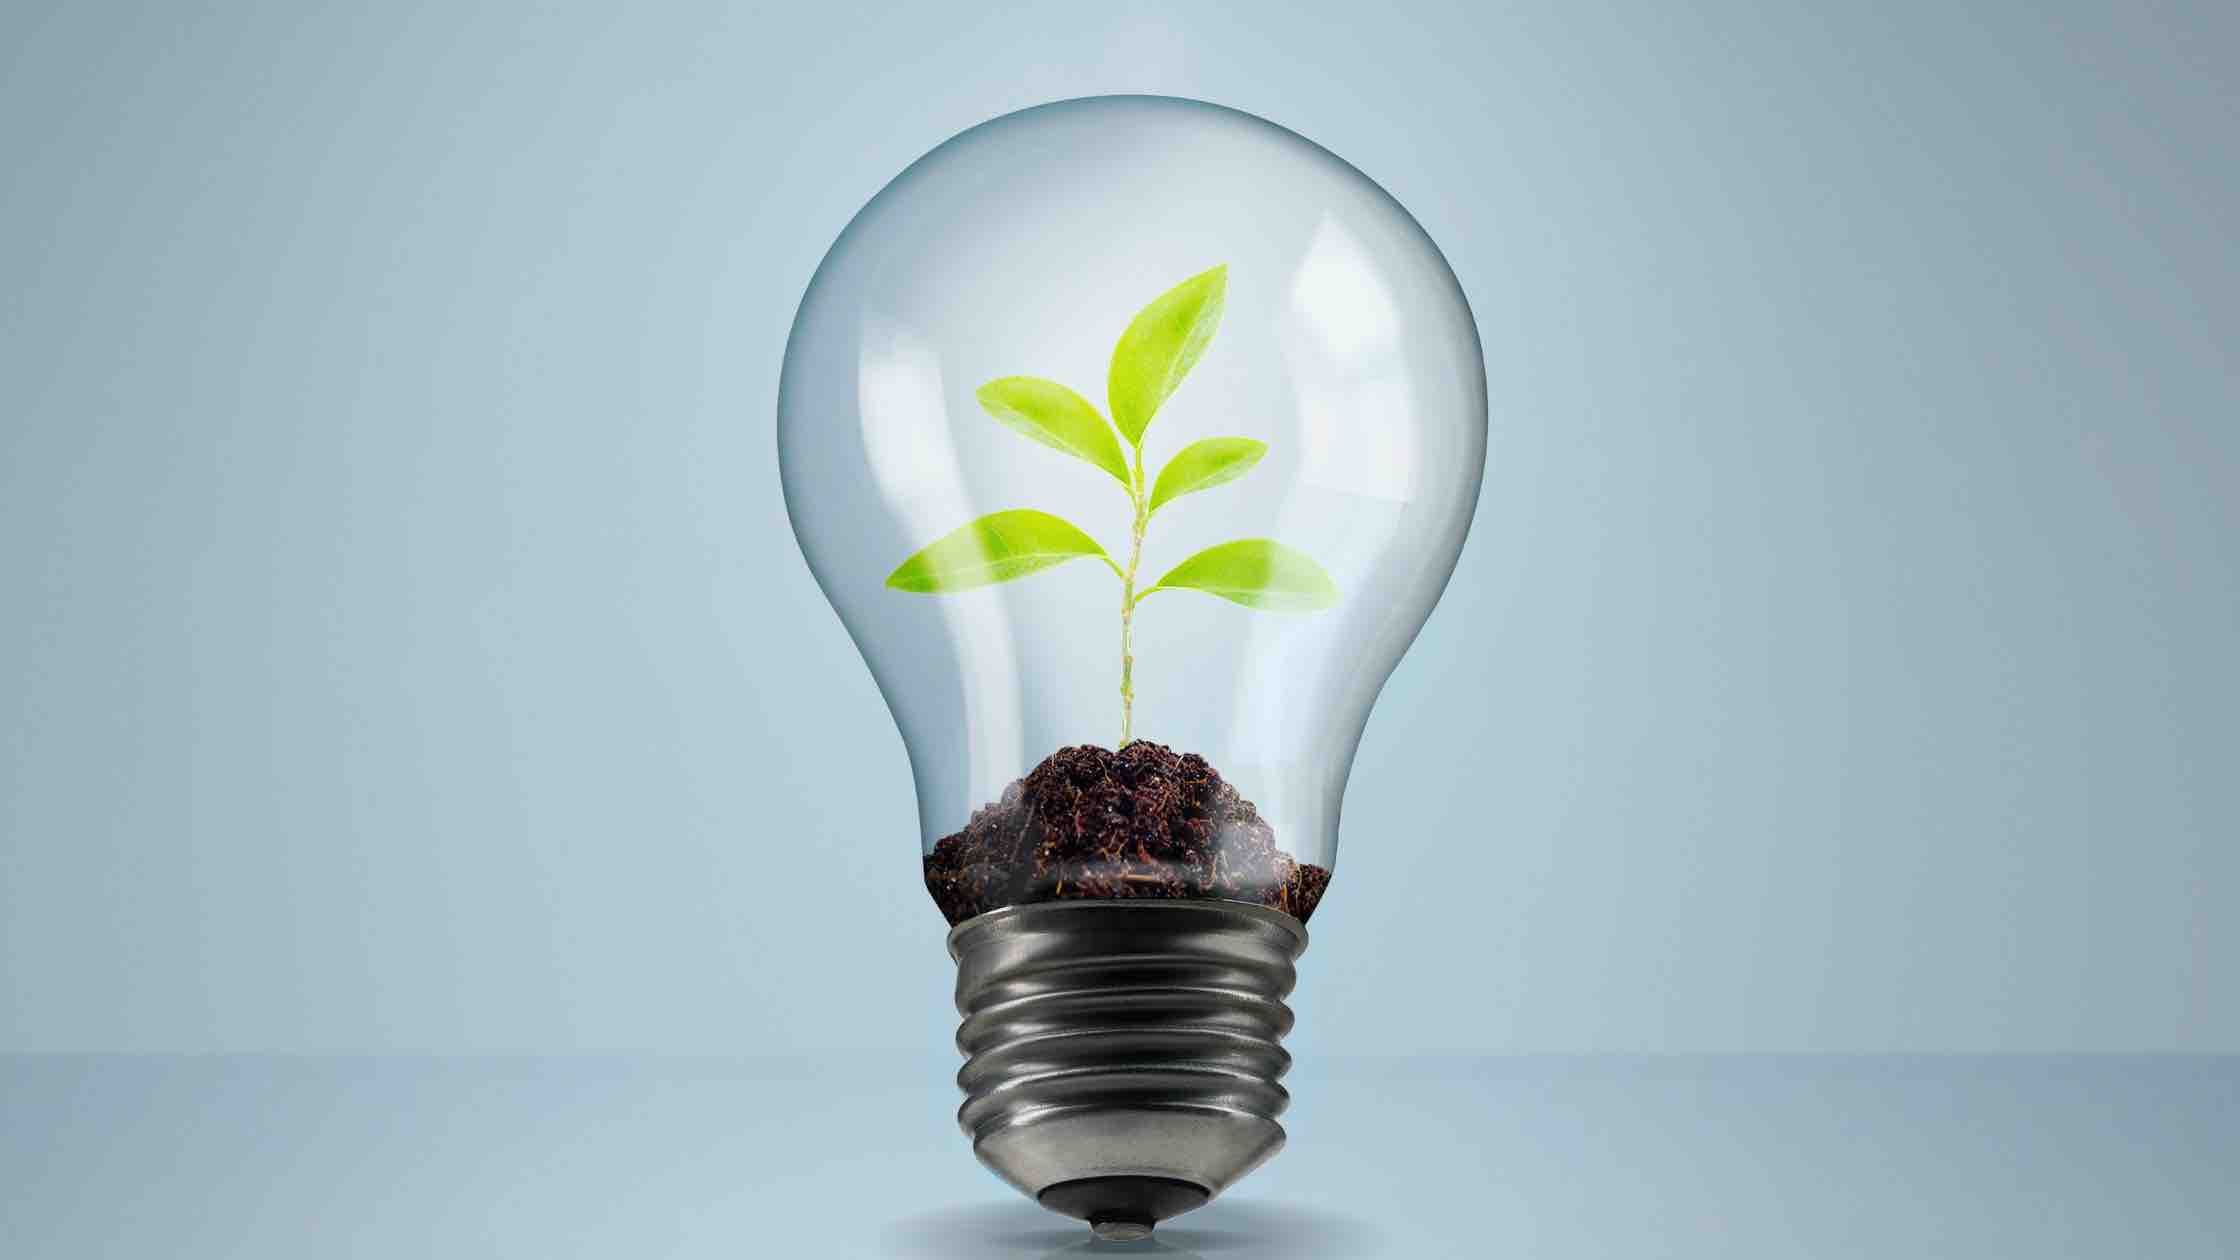 Energy, sustainability and innovation